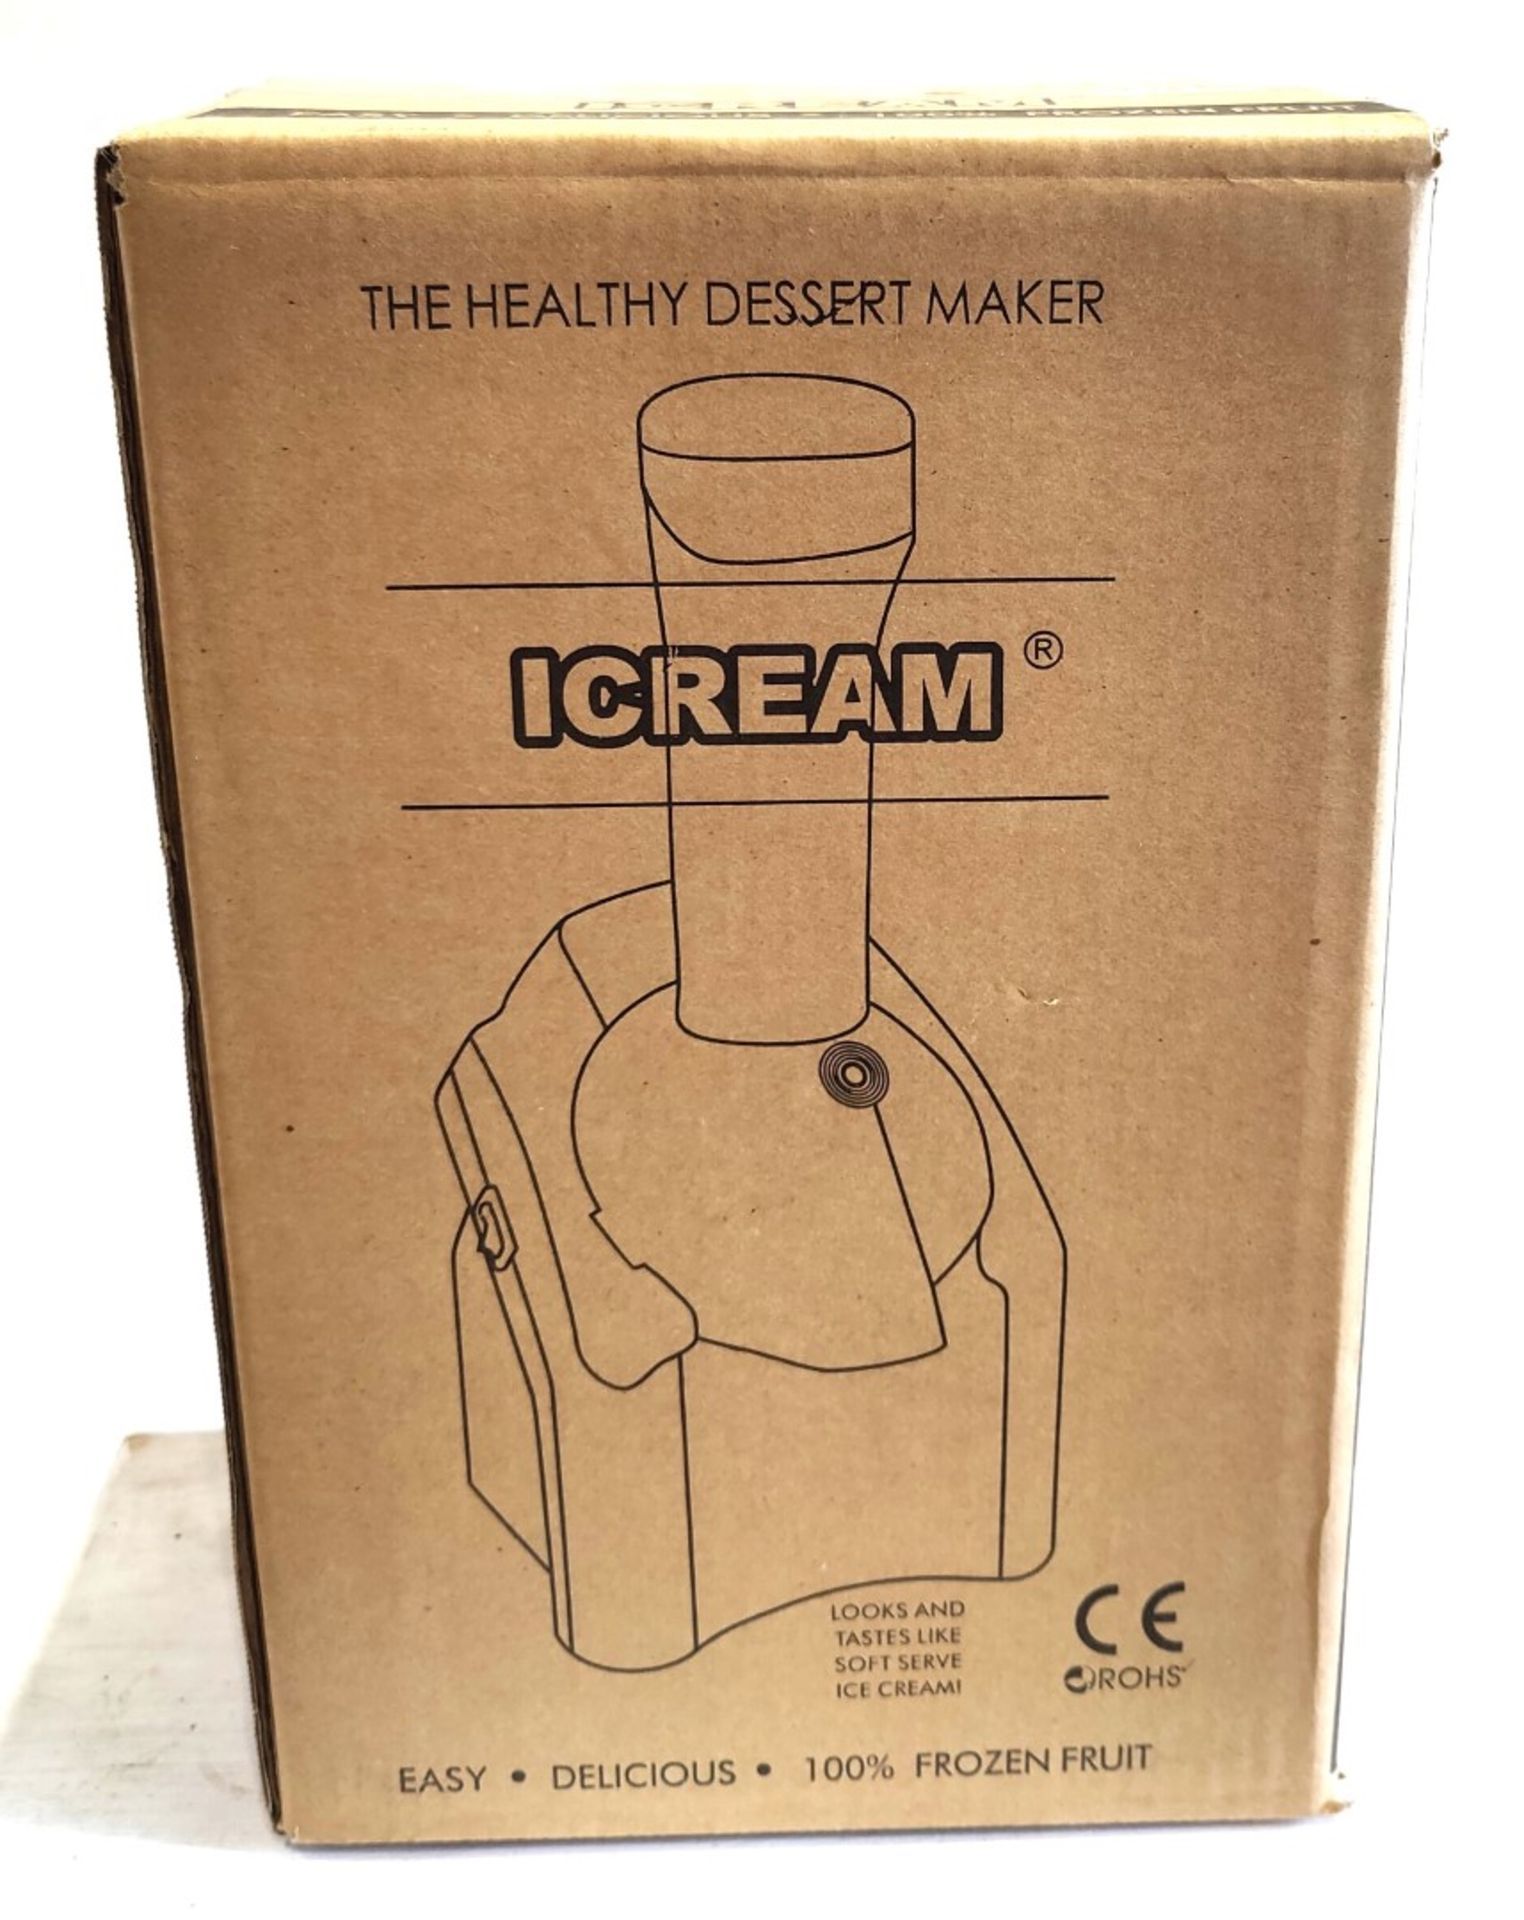 1 x Icream Healthy Desert Maker - Yogurt and Soft Ice Cream Home Appliance - 240v - Brand New - Image 6 of 12